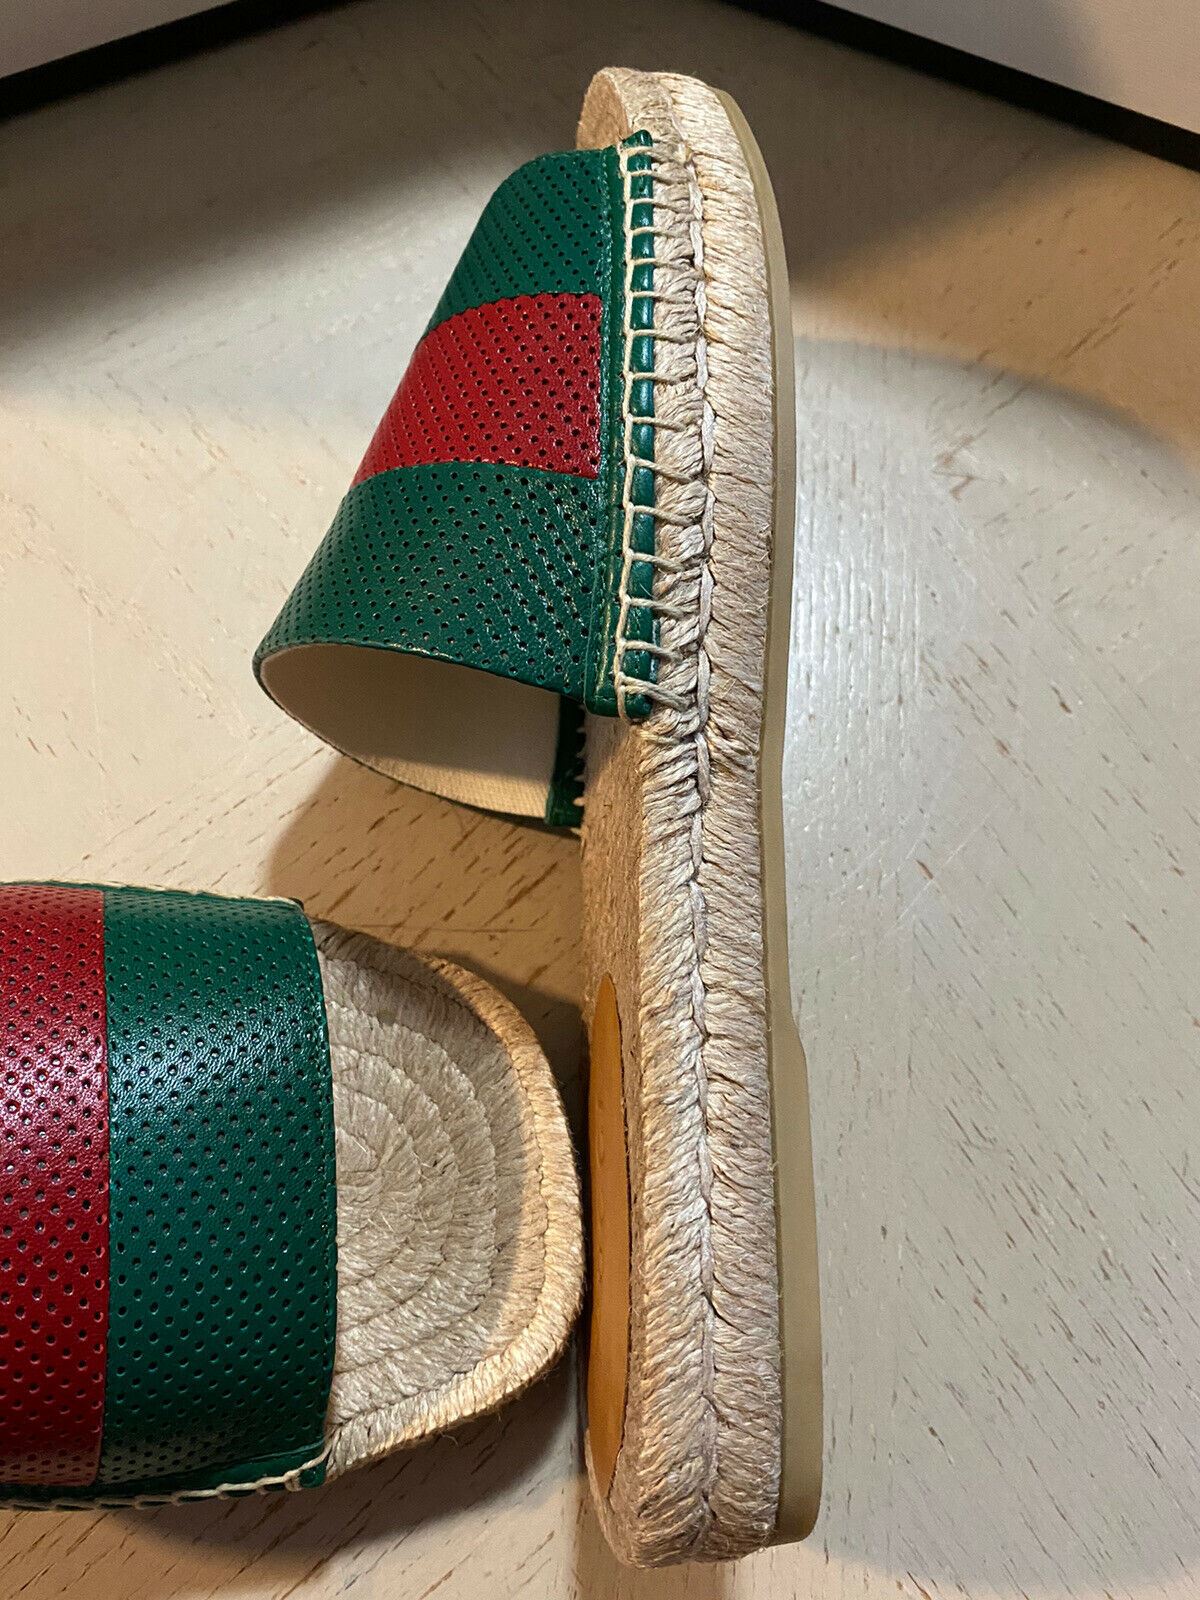 NIB Gucci Mens Sandal Espadrille Shoes Green/Red 9.5 US/8.5 UK